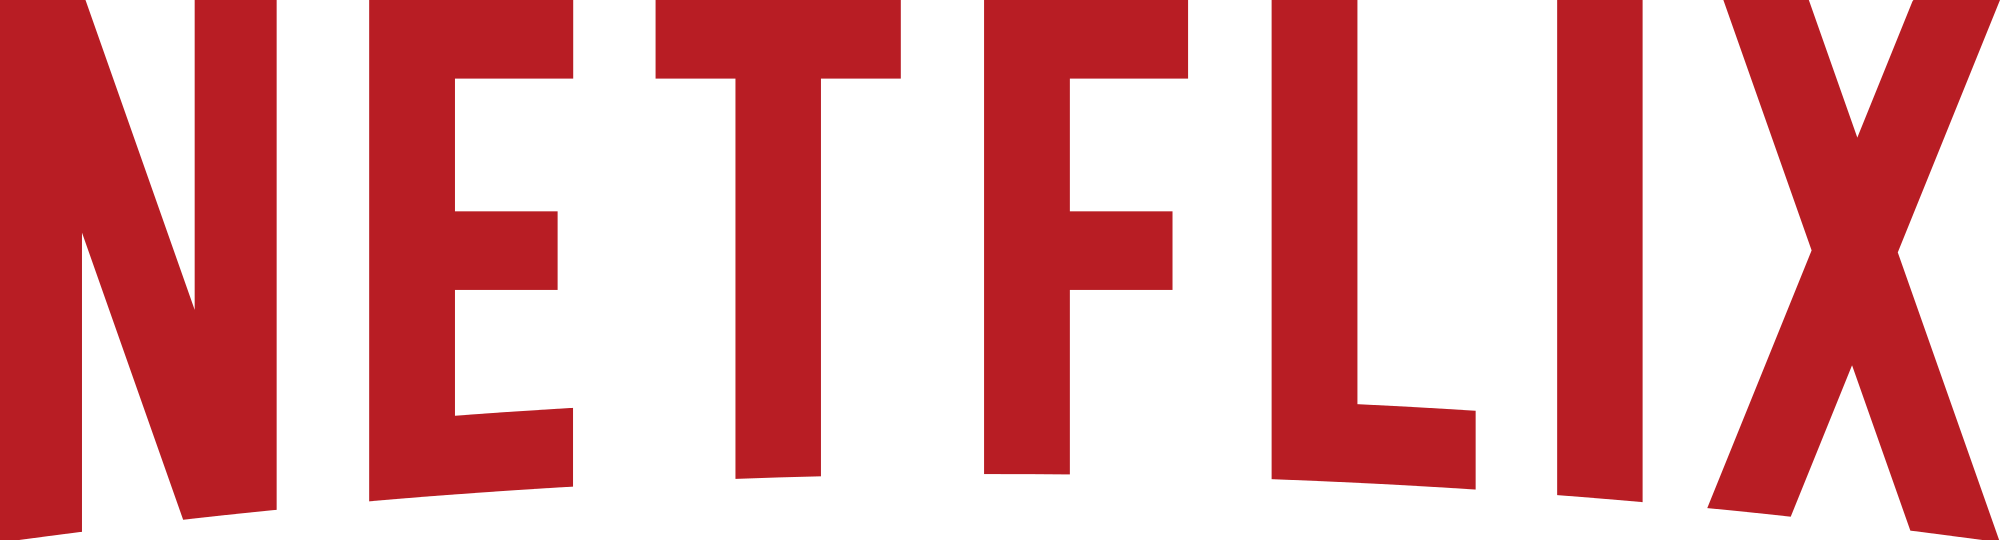 netflix logo transparent background